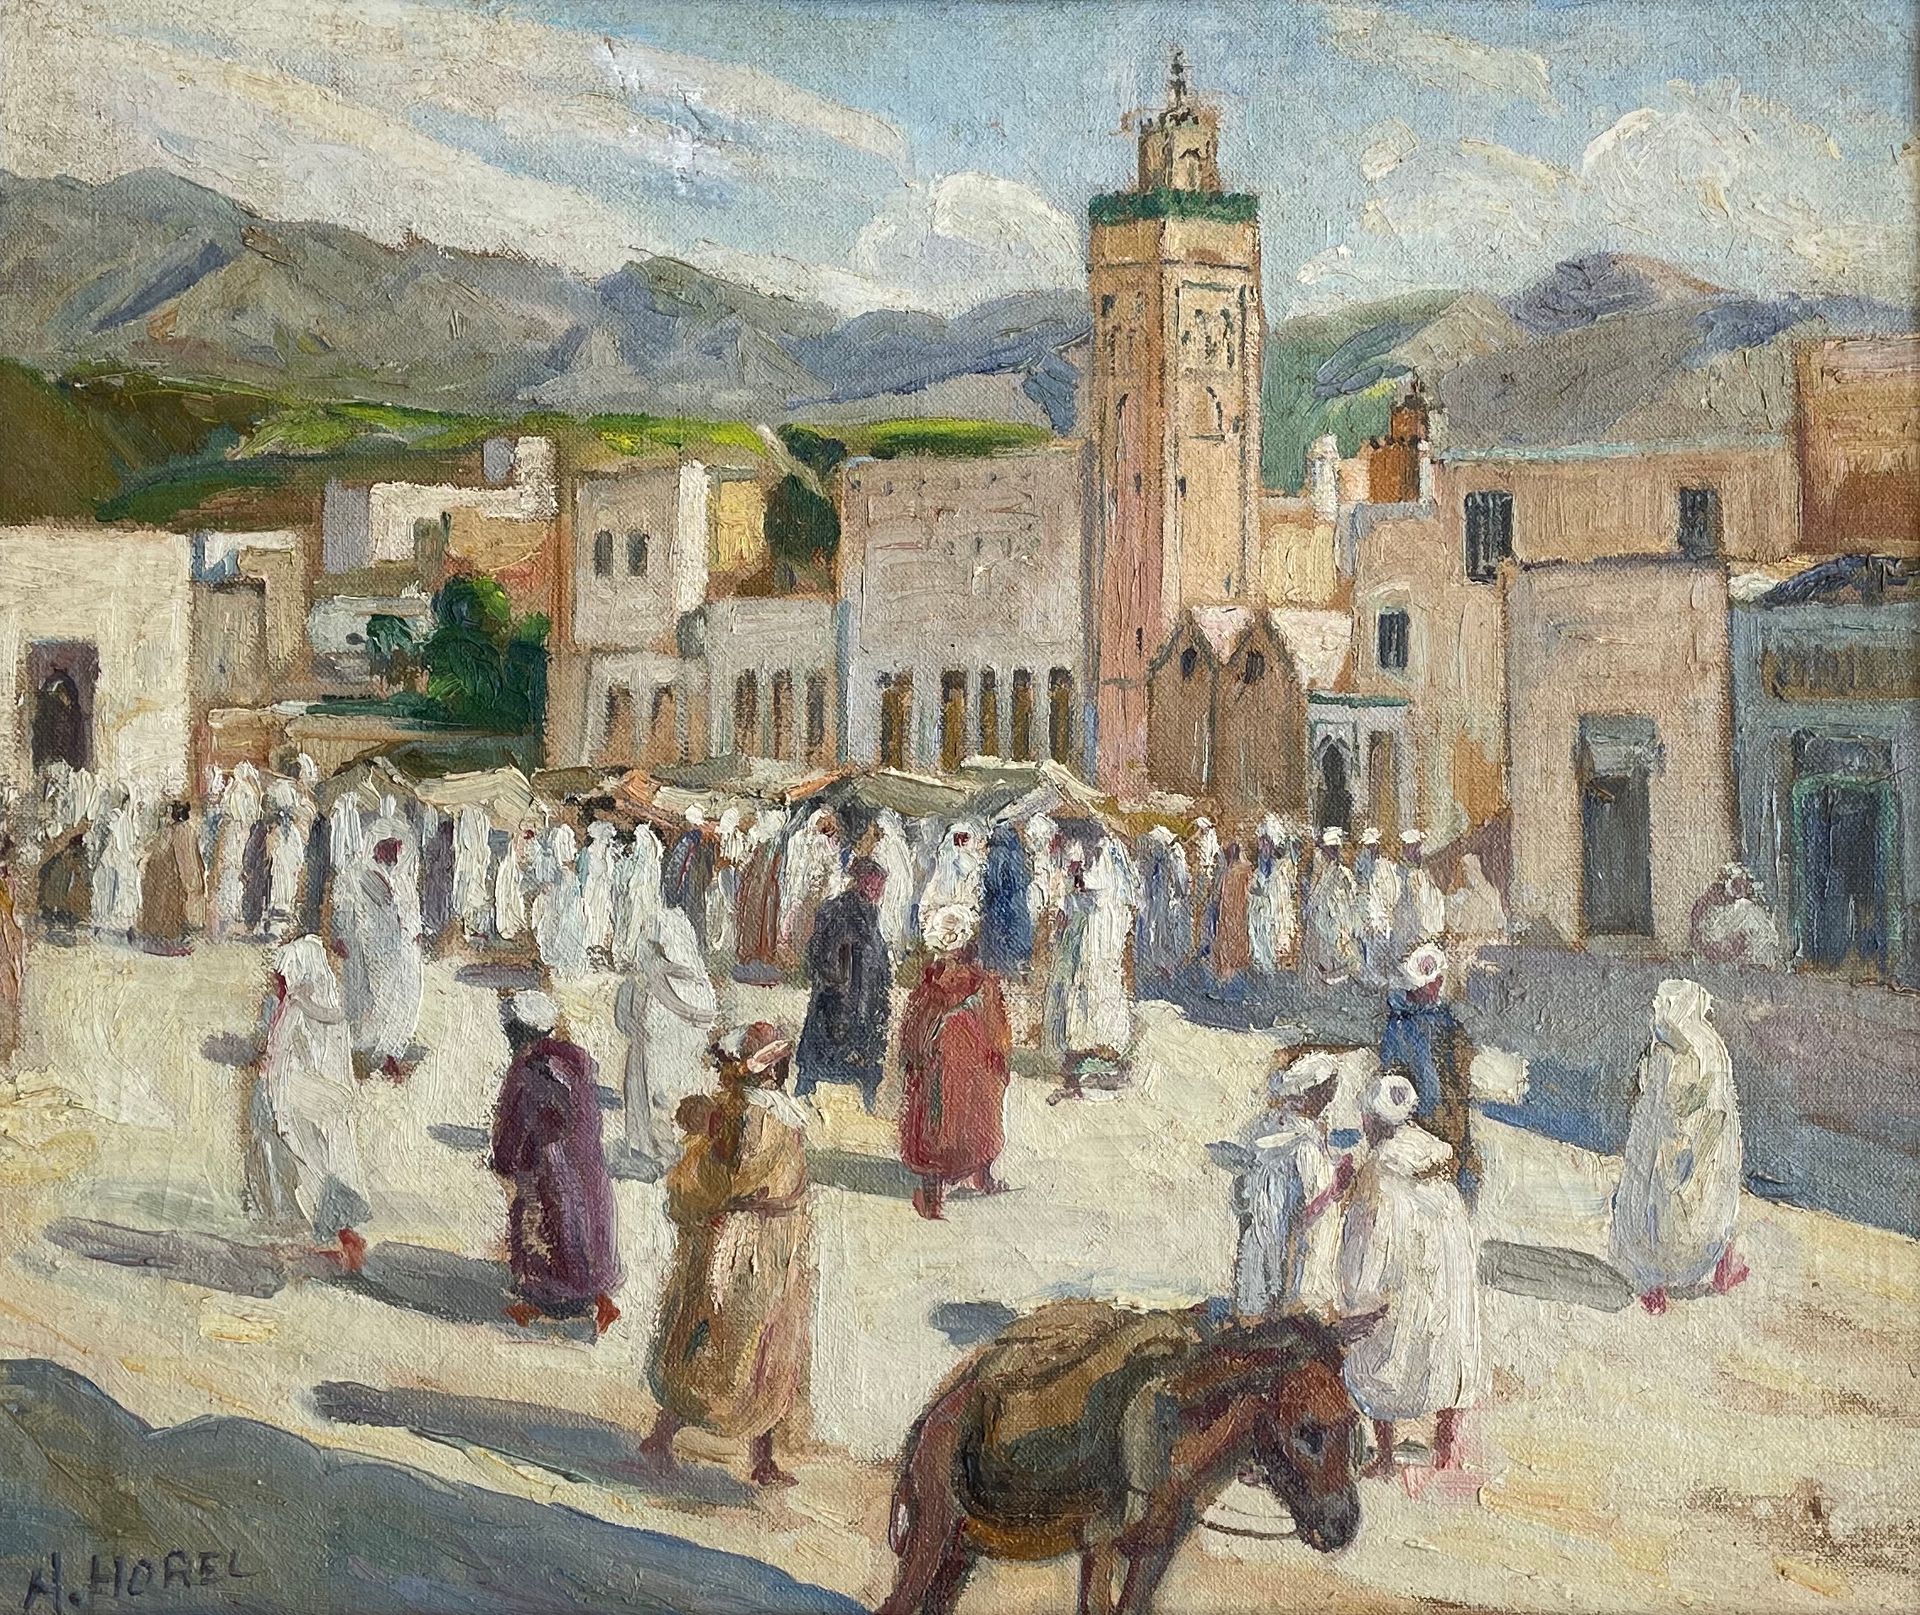 Albert HOREL (1876-1964) 


东方市场场景



布面油画，左下角有签名 



38,5 x 46,5 cm